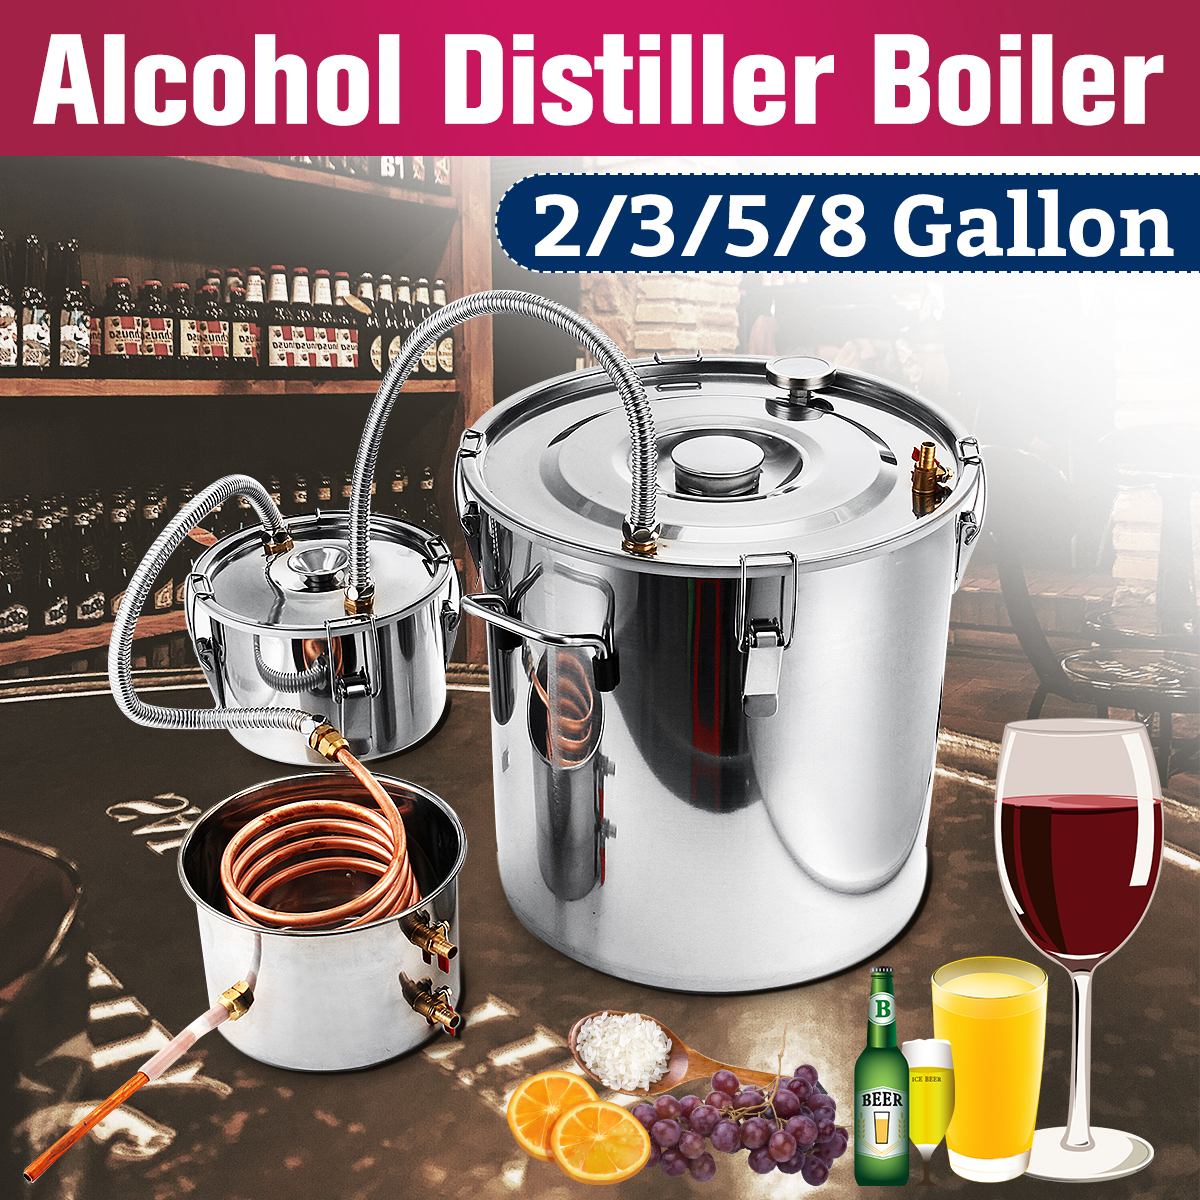 2/3/5/8 Gallons Moonshine Still Spirits Kit Water Alcohol Distiller Copper Tube Boiler Home Brewing Kit with Thumper Keg Stainless Steel 13